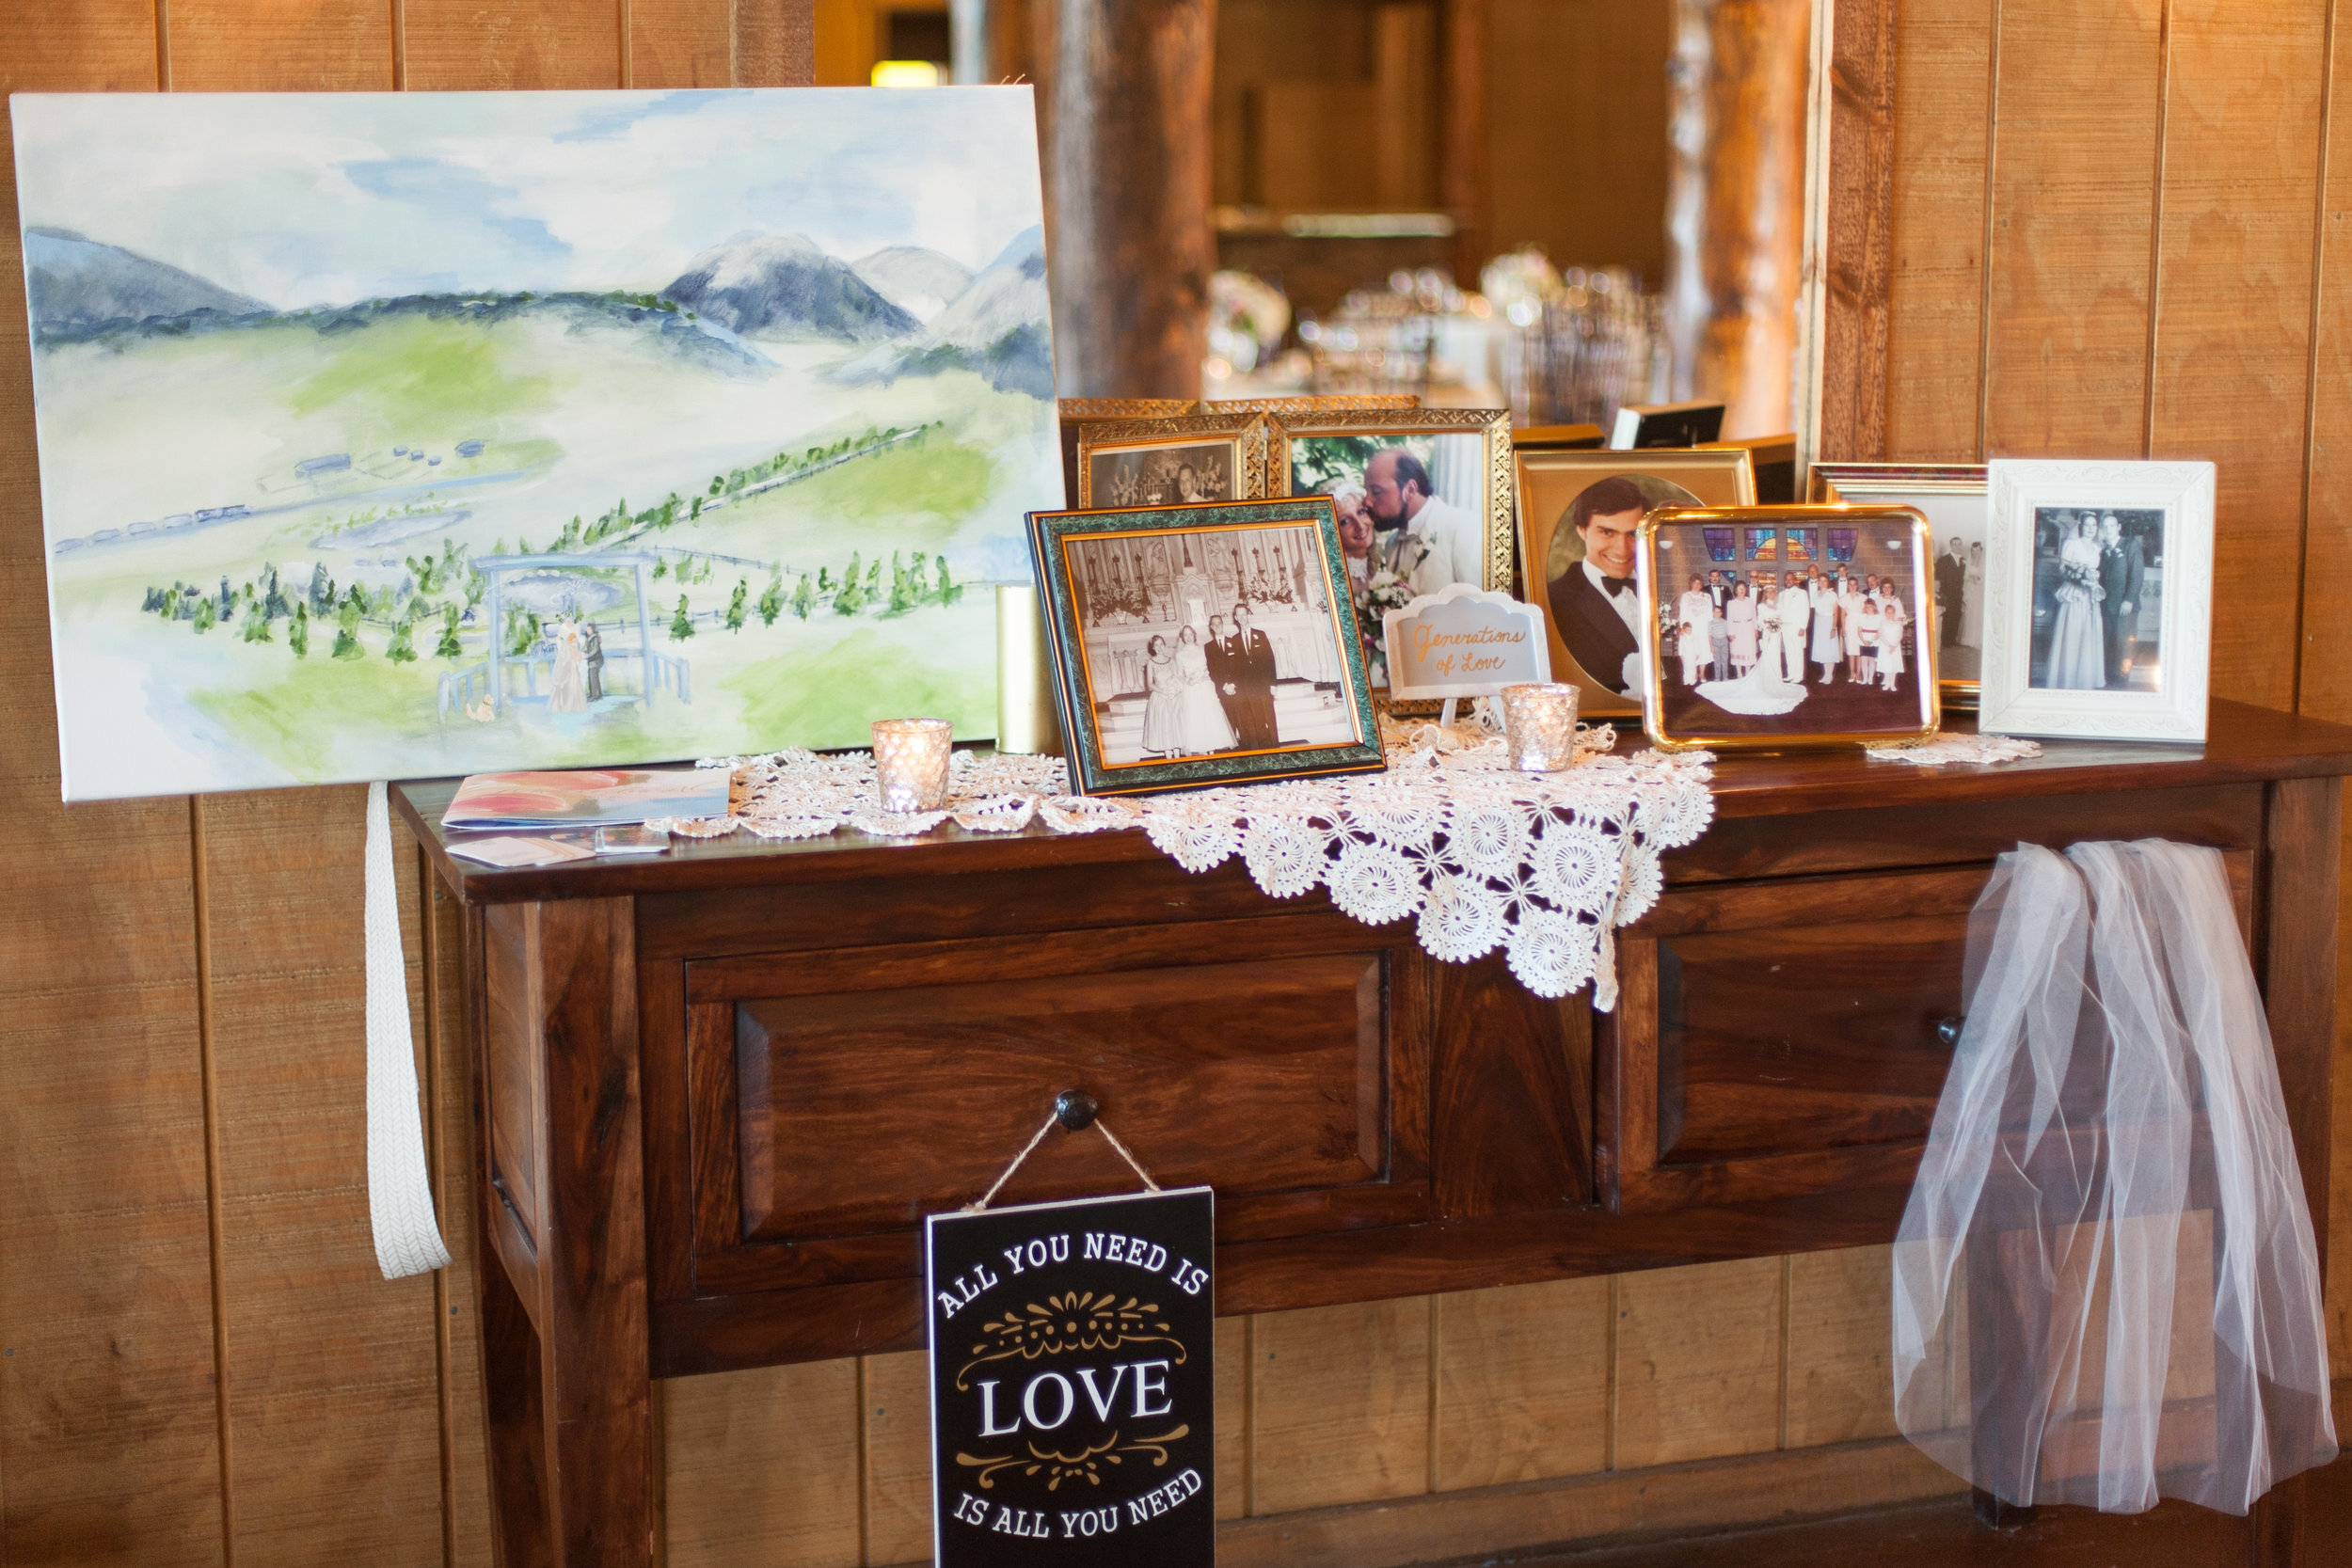 Kyle-Scott-Spruce-Mountain-wedding-by-Lisa-O'Dwyer-662.jpg